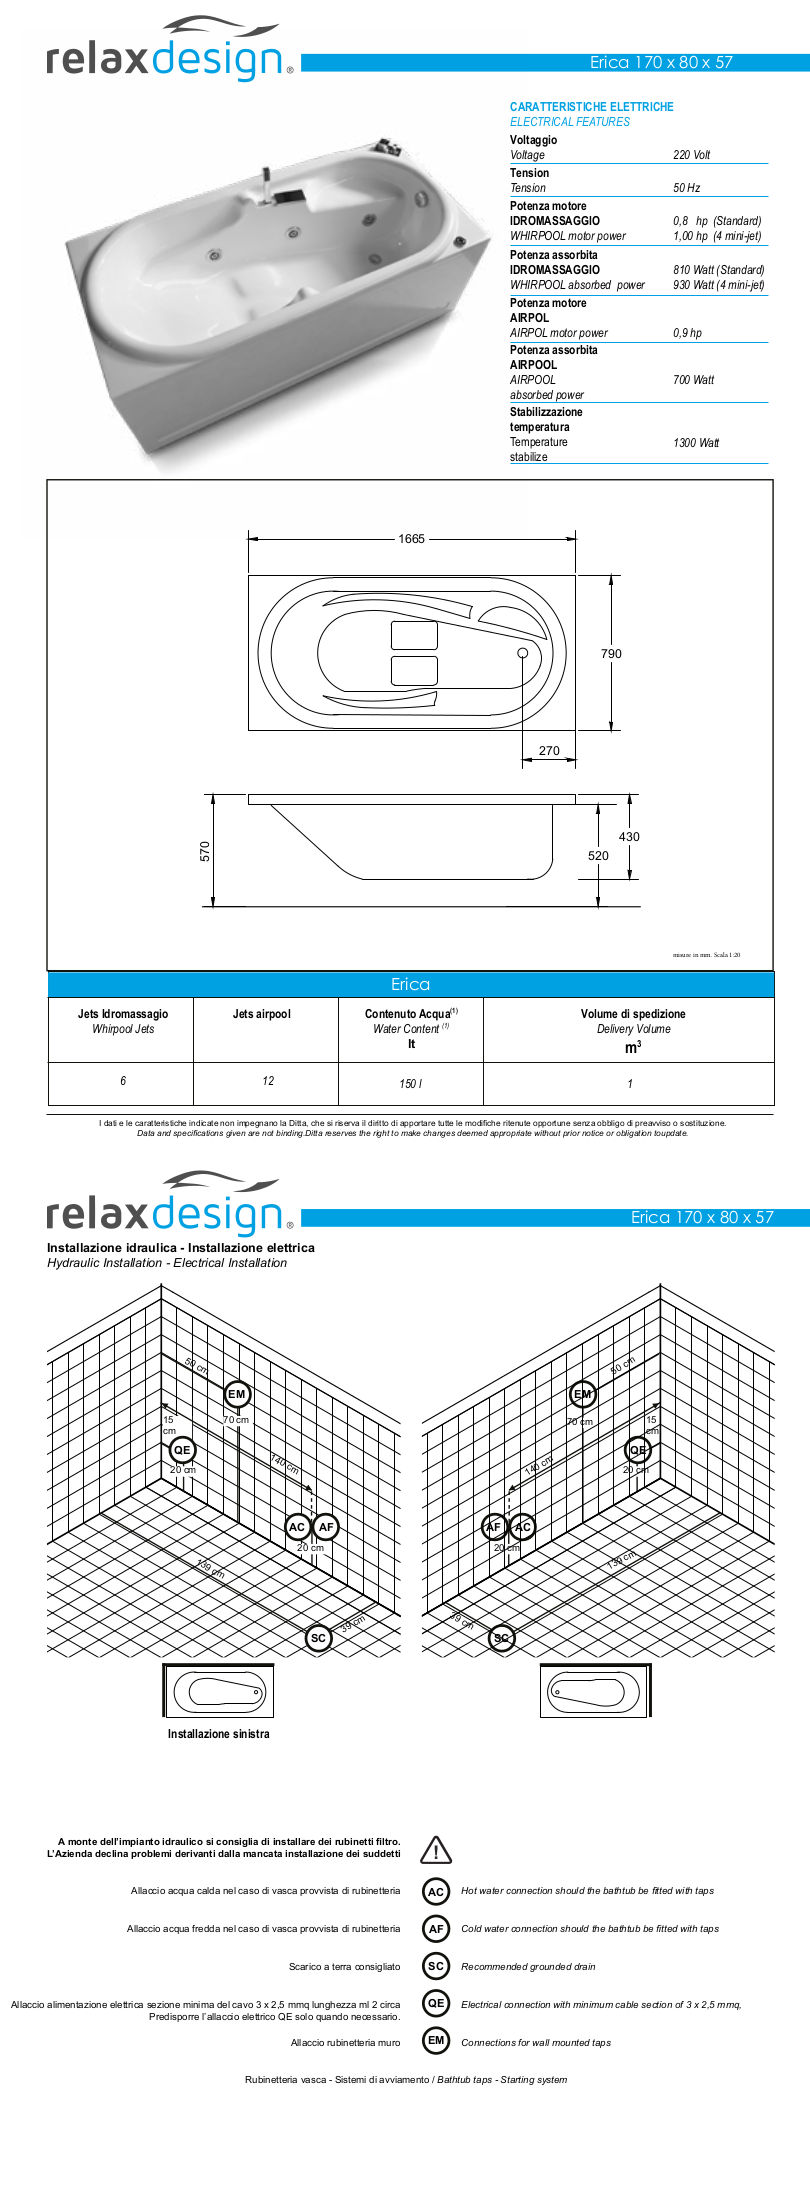 erica relax design bathtub data sheet